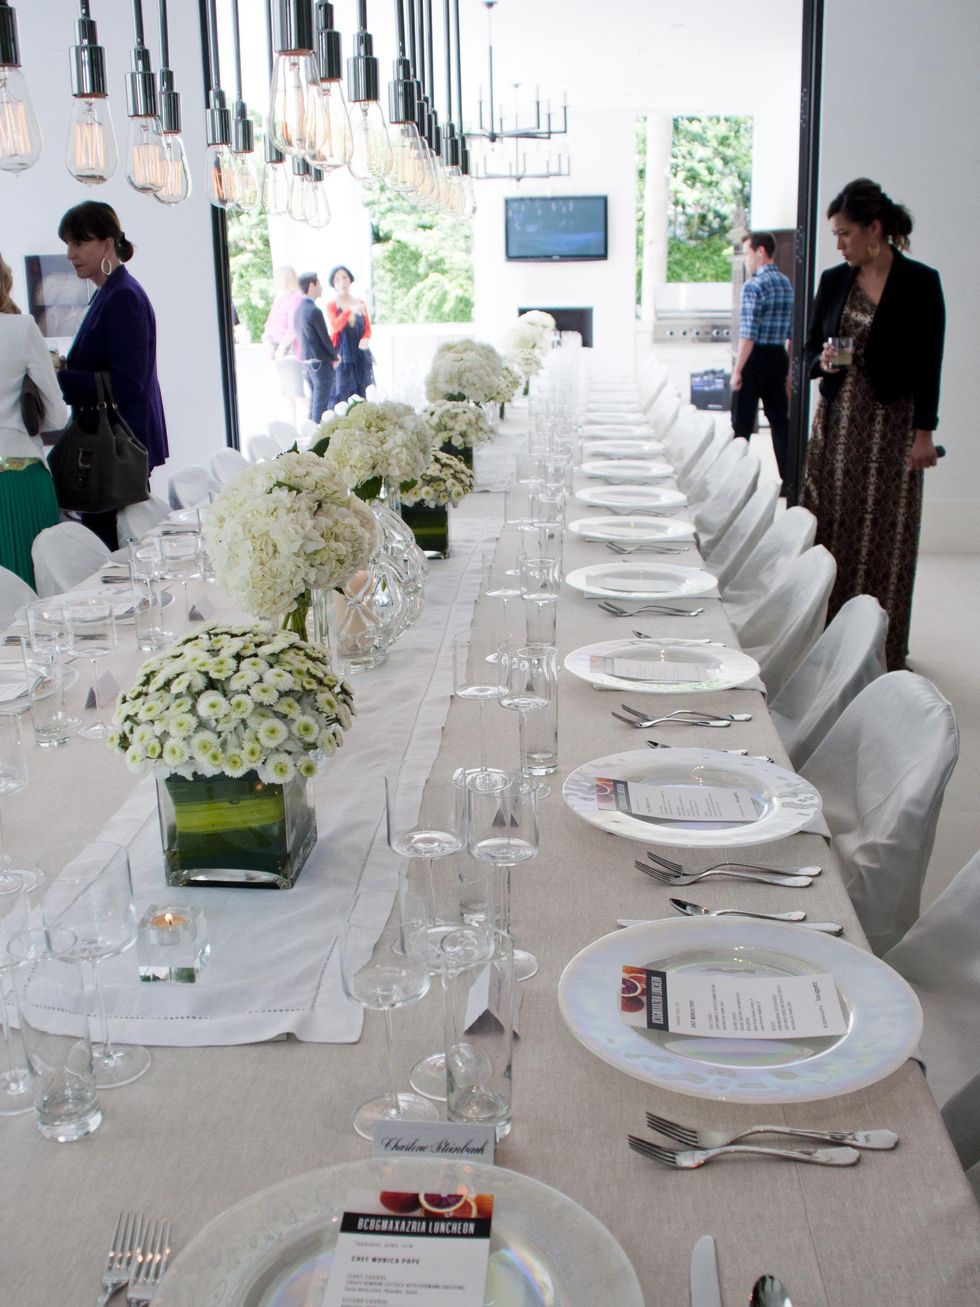 News_011_BCBG Max Azria luncheon_fashion show_April 2012_table setting_table decorations